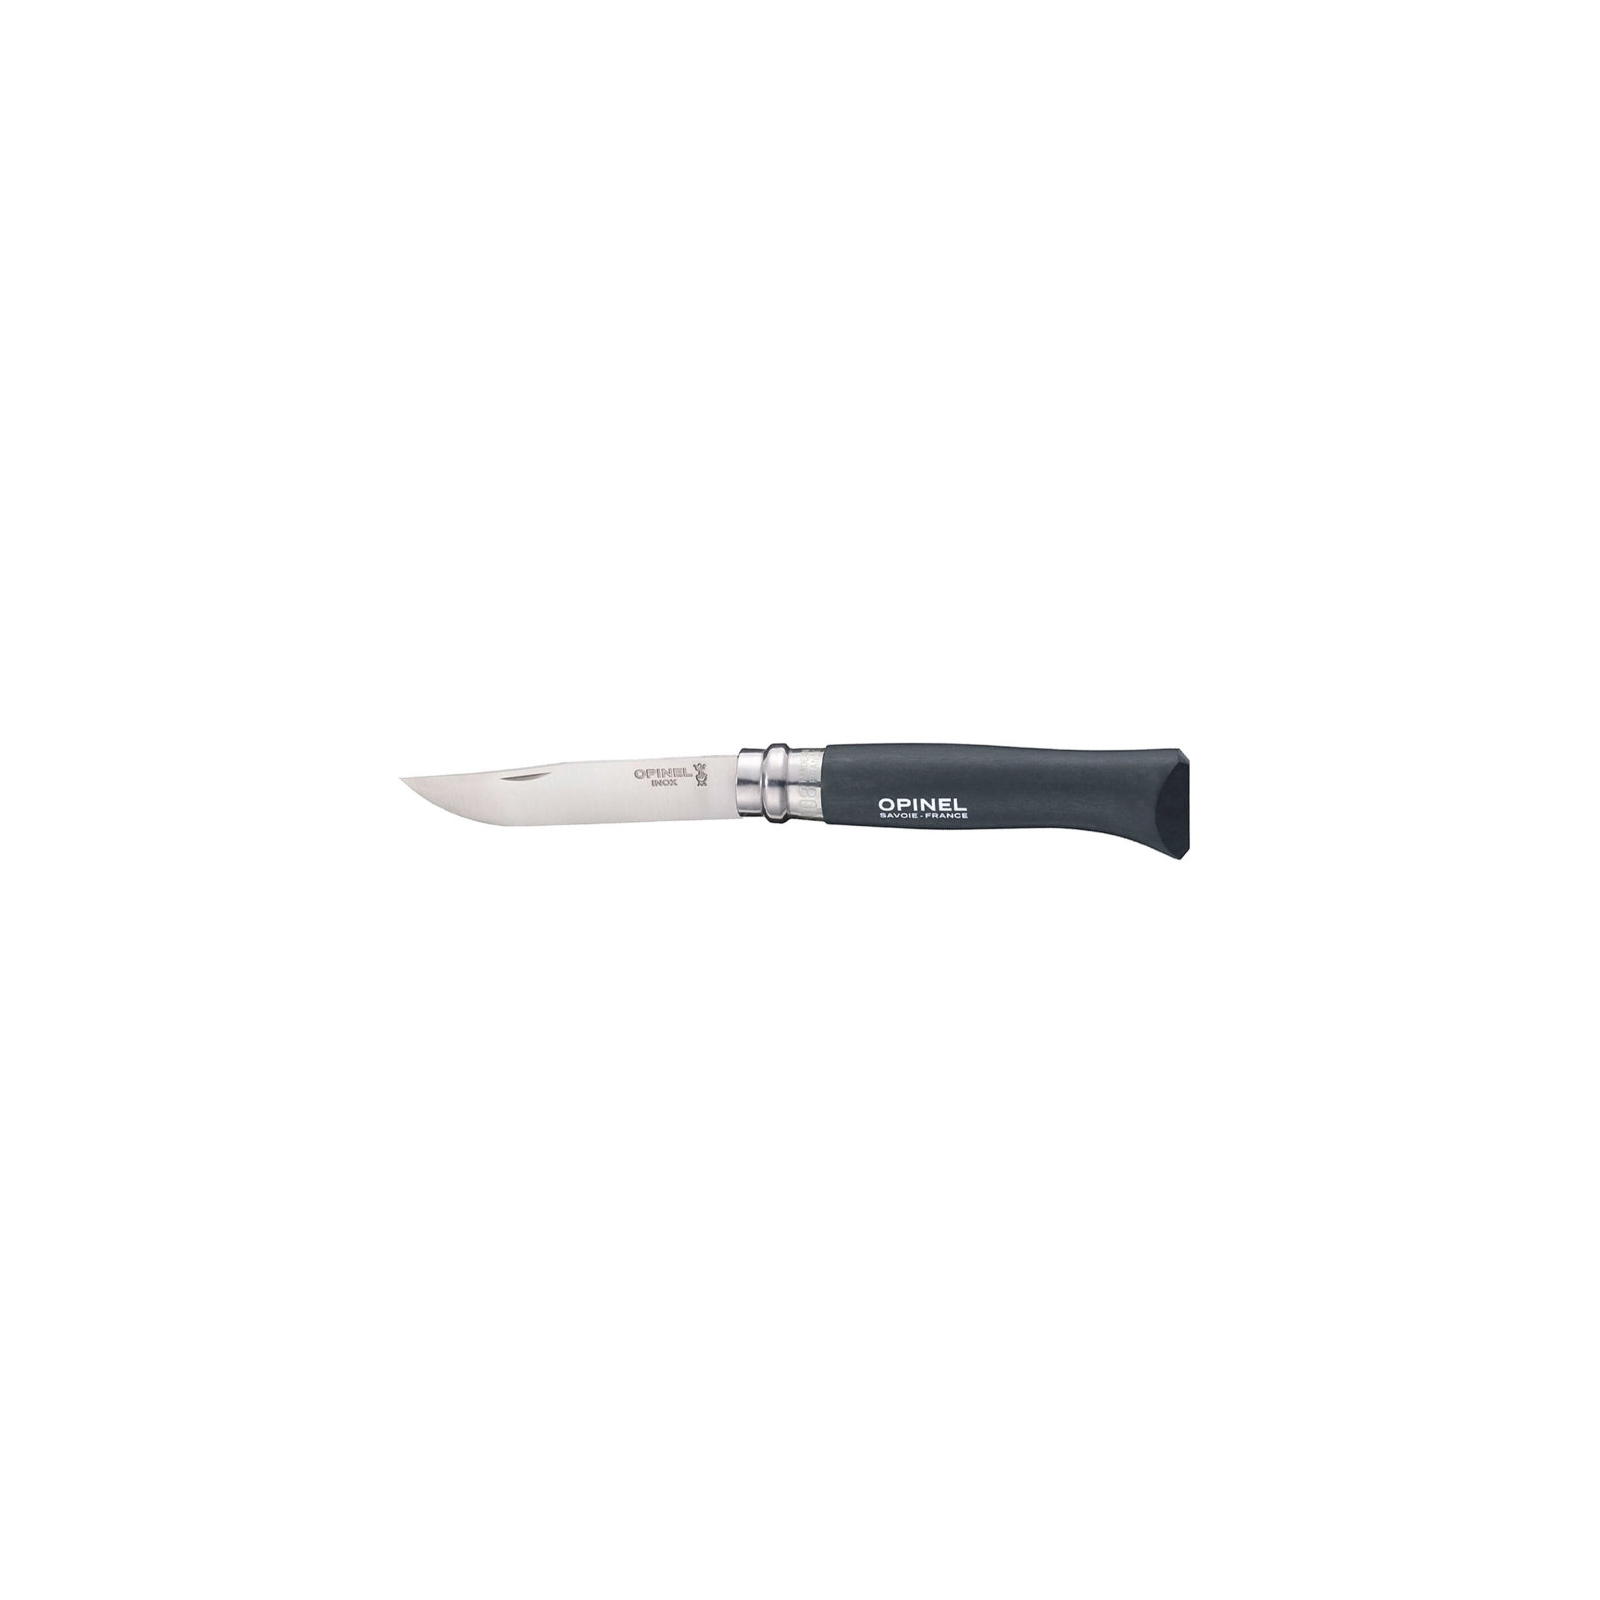 Нож Opinel №8 Inox VRI темно-серый, в блистере (002262)